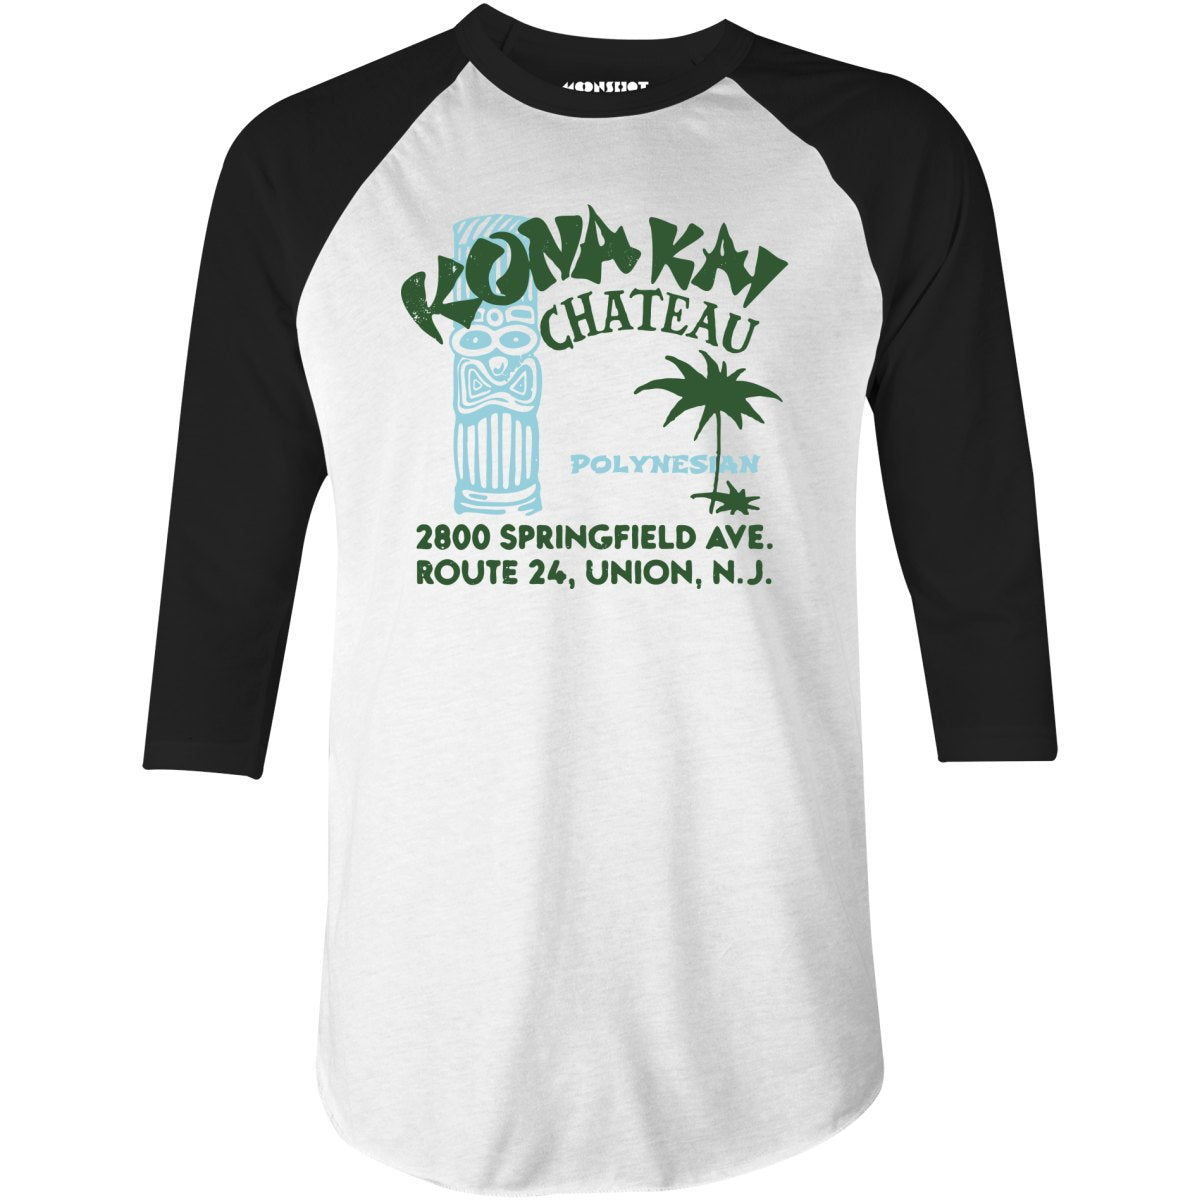 Kona Kai Chateu - Union, NJ - Vintage Tiki Bar - 3/4 Sleeve Raglan T-Shirt